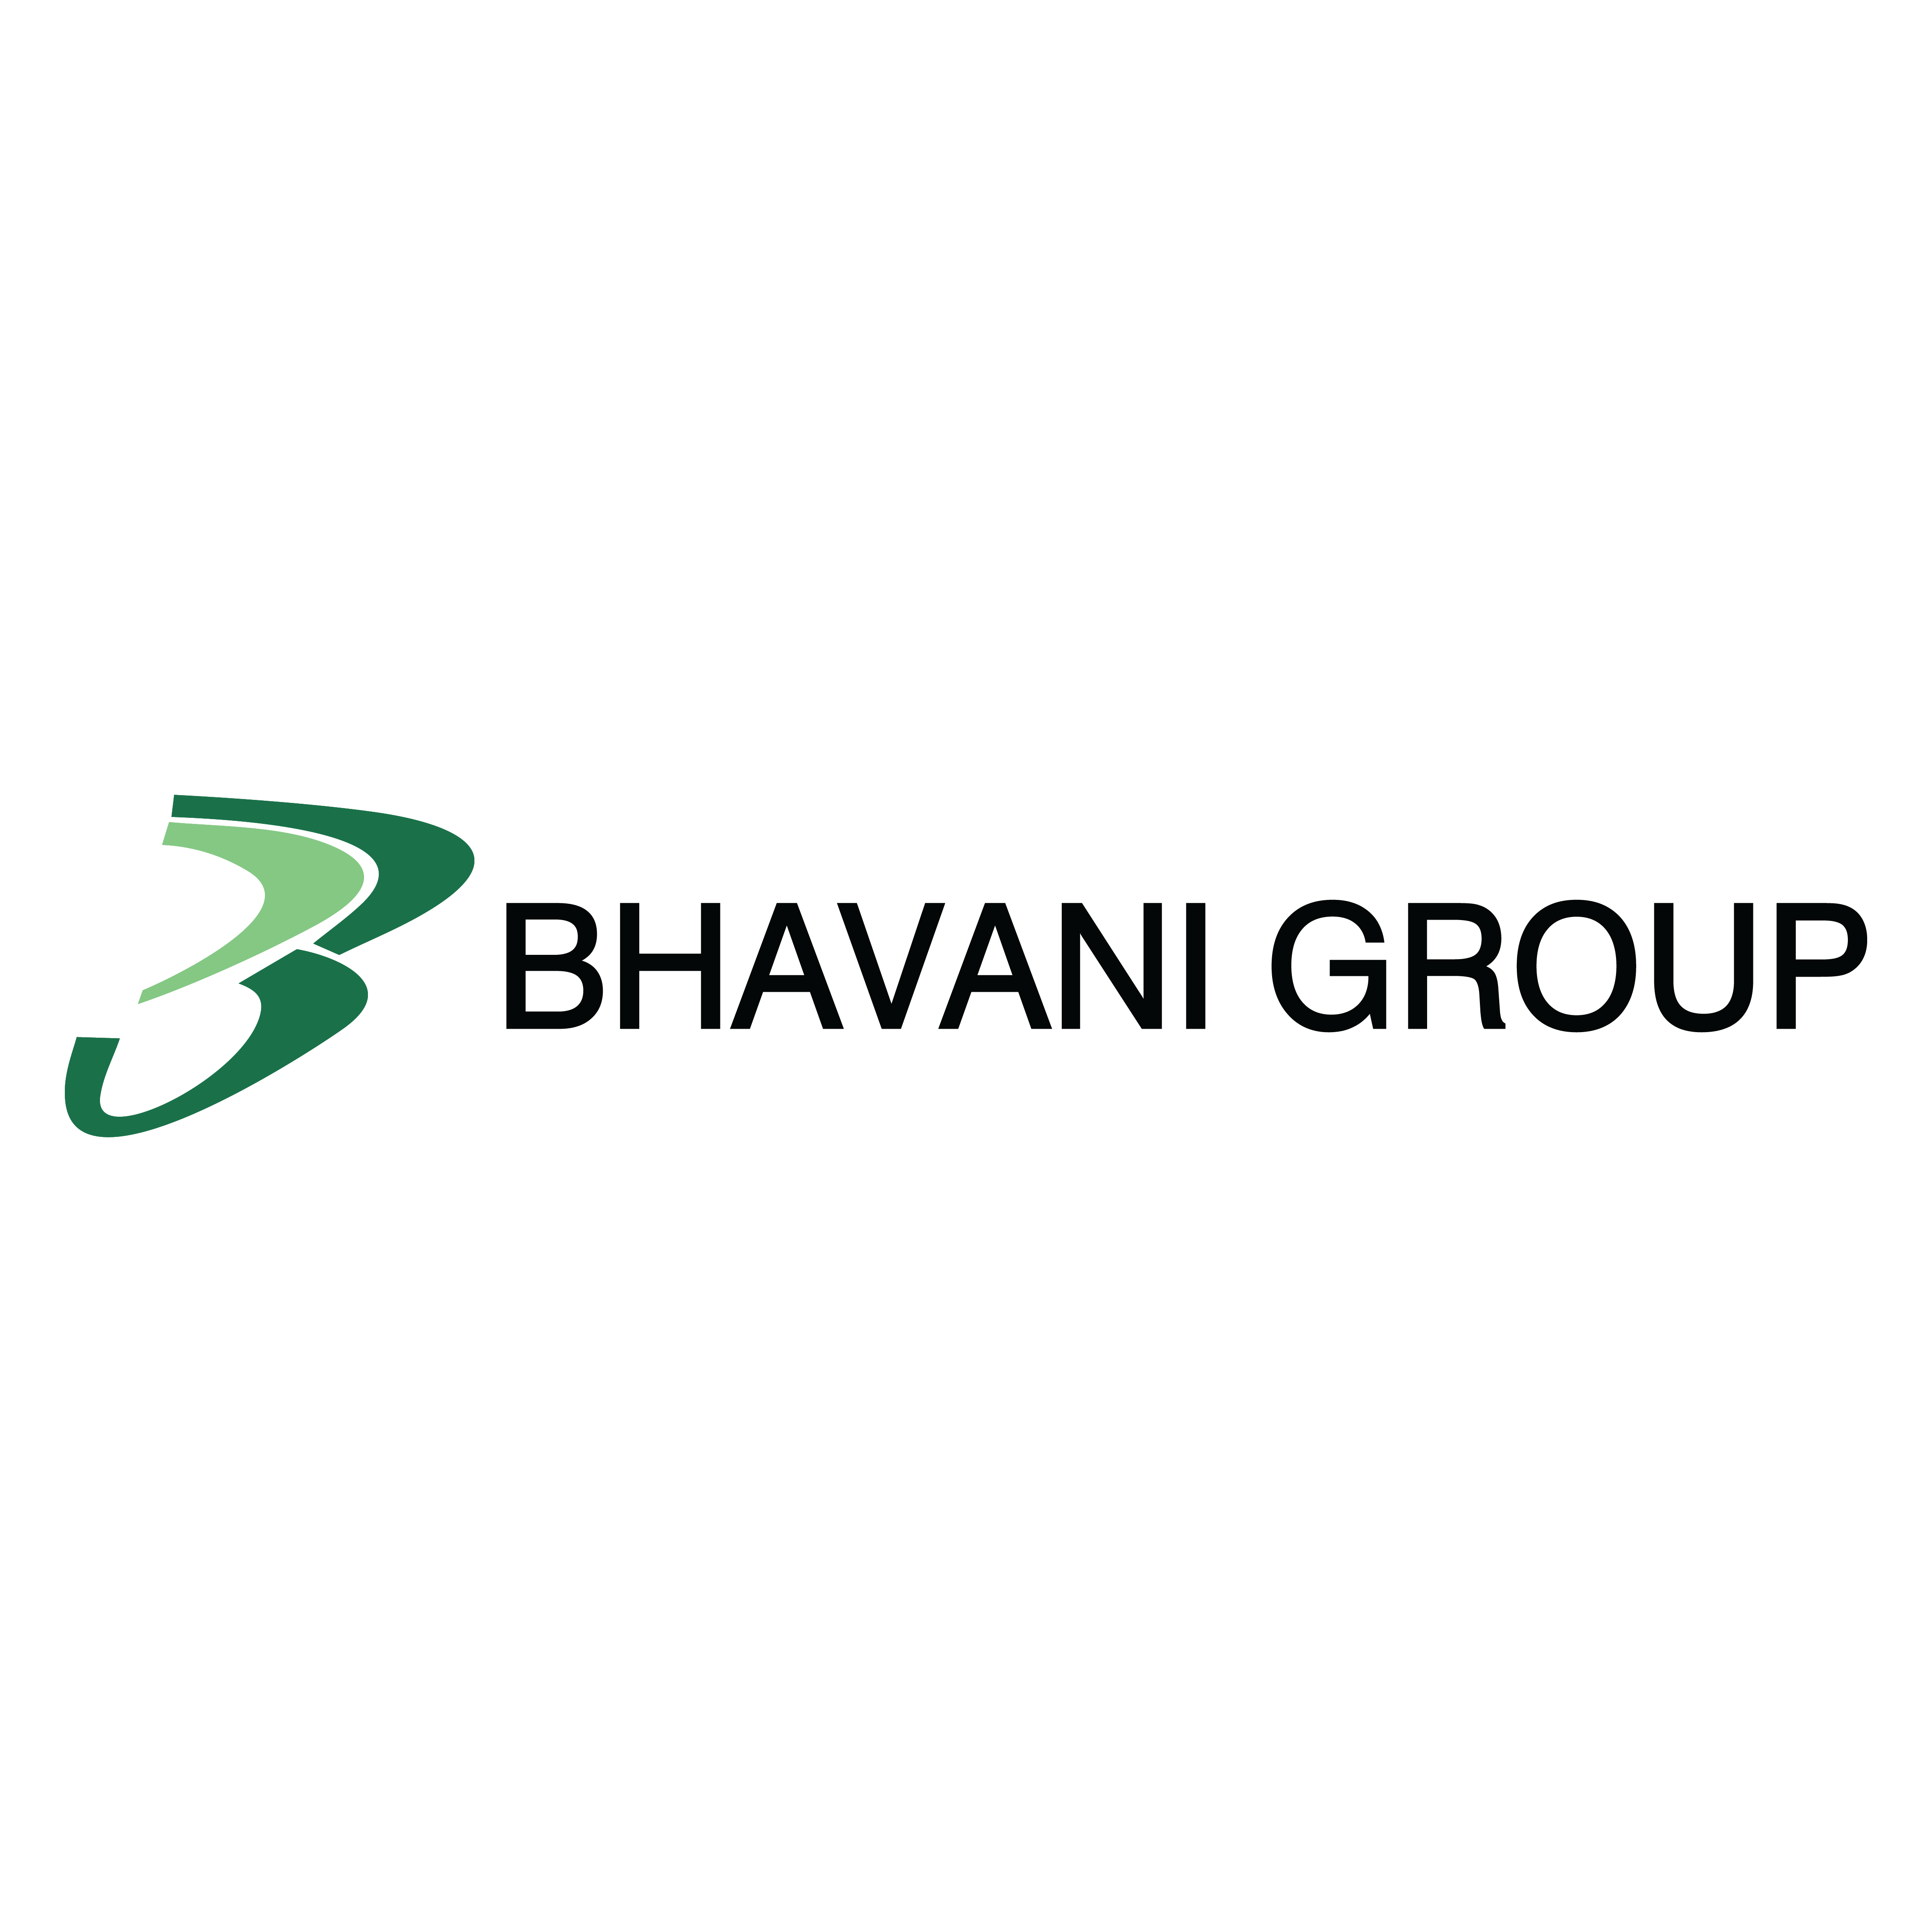 BHAVANI GROUP (DISPLAY NAME)